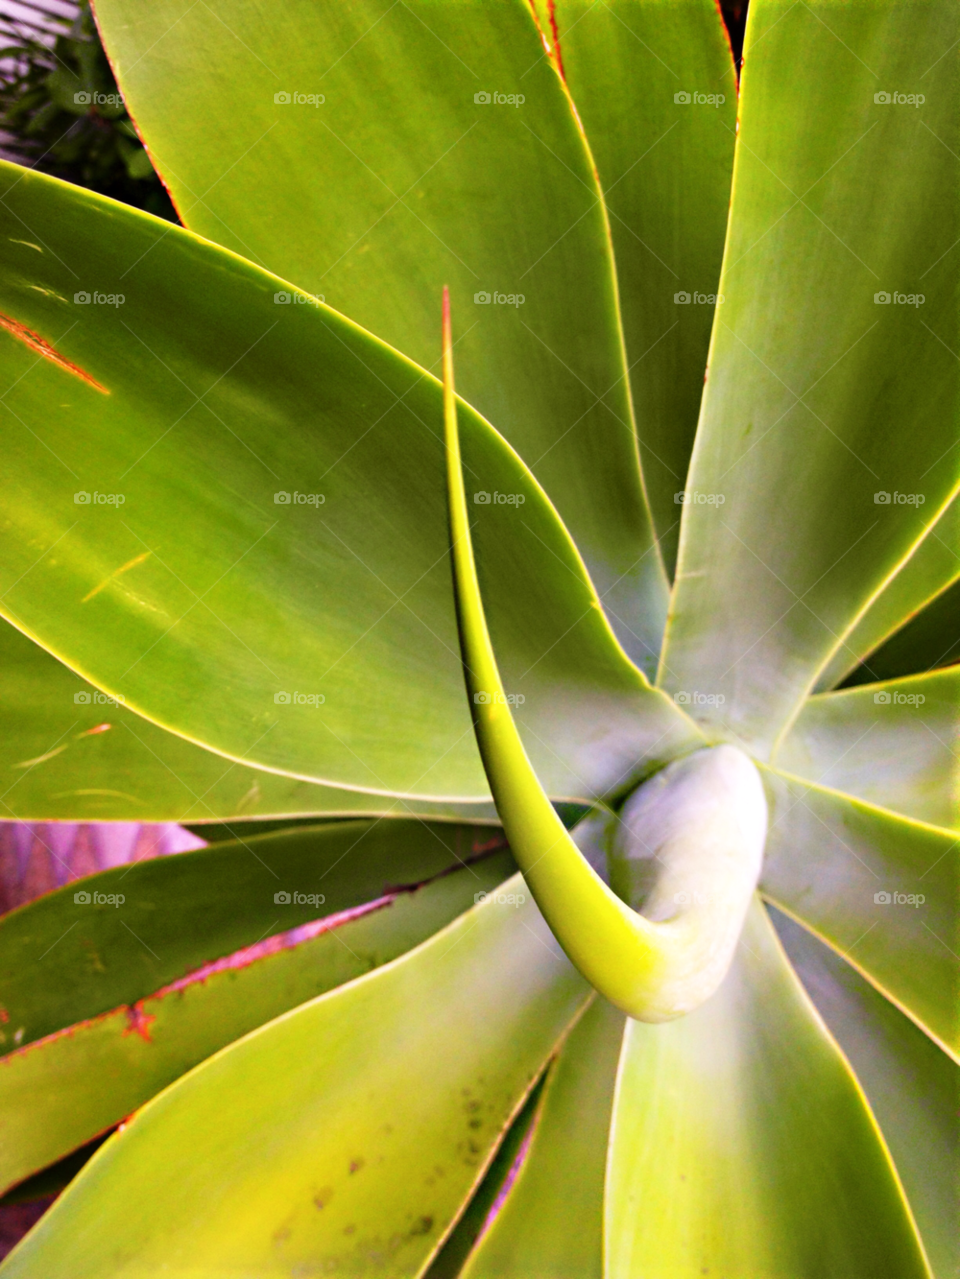 green plant tropic detail by rgomezphoto